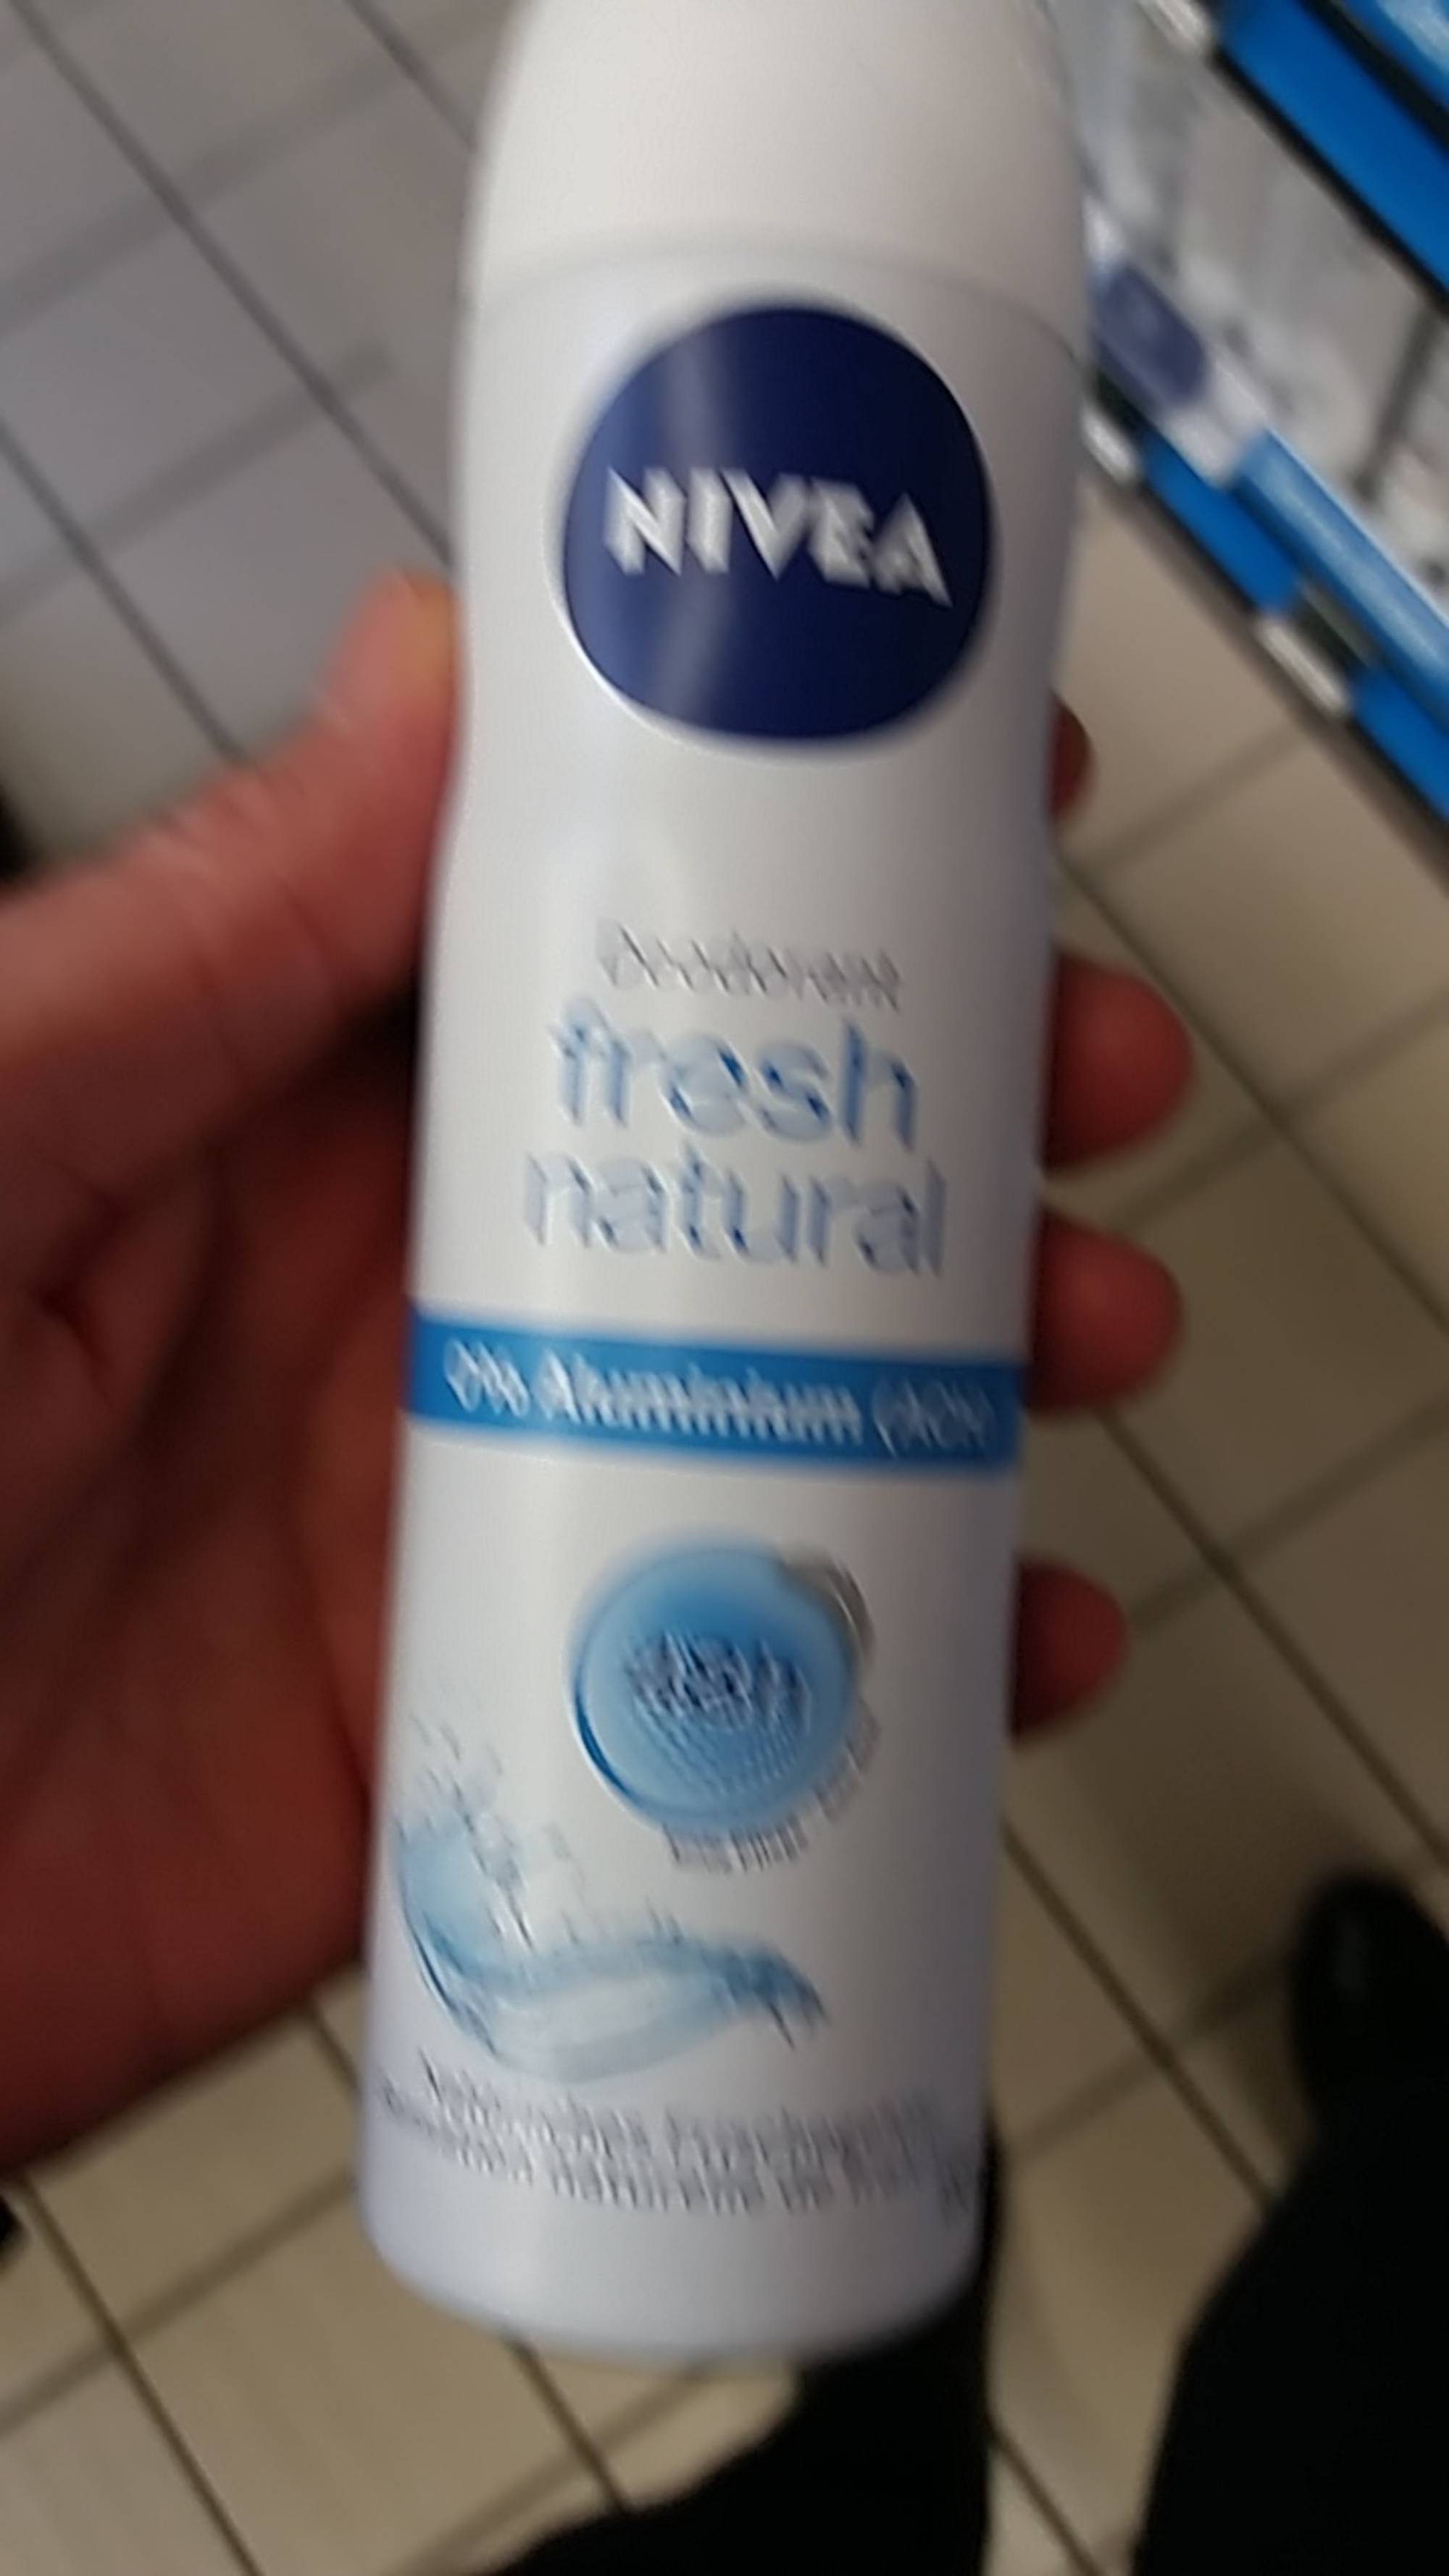 NIVEA - Fresh natural - Déodorant 48h 